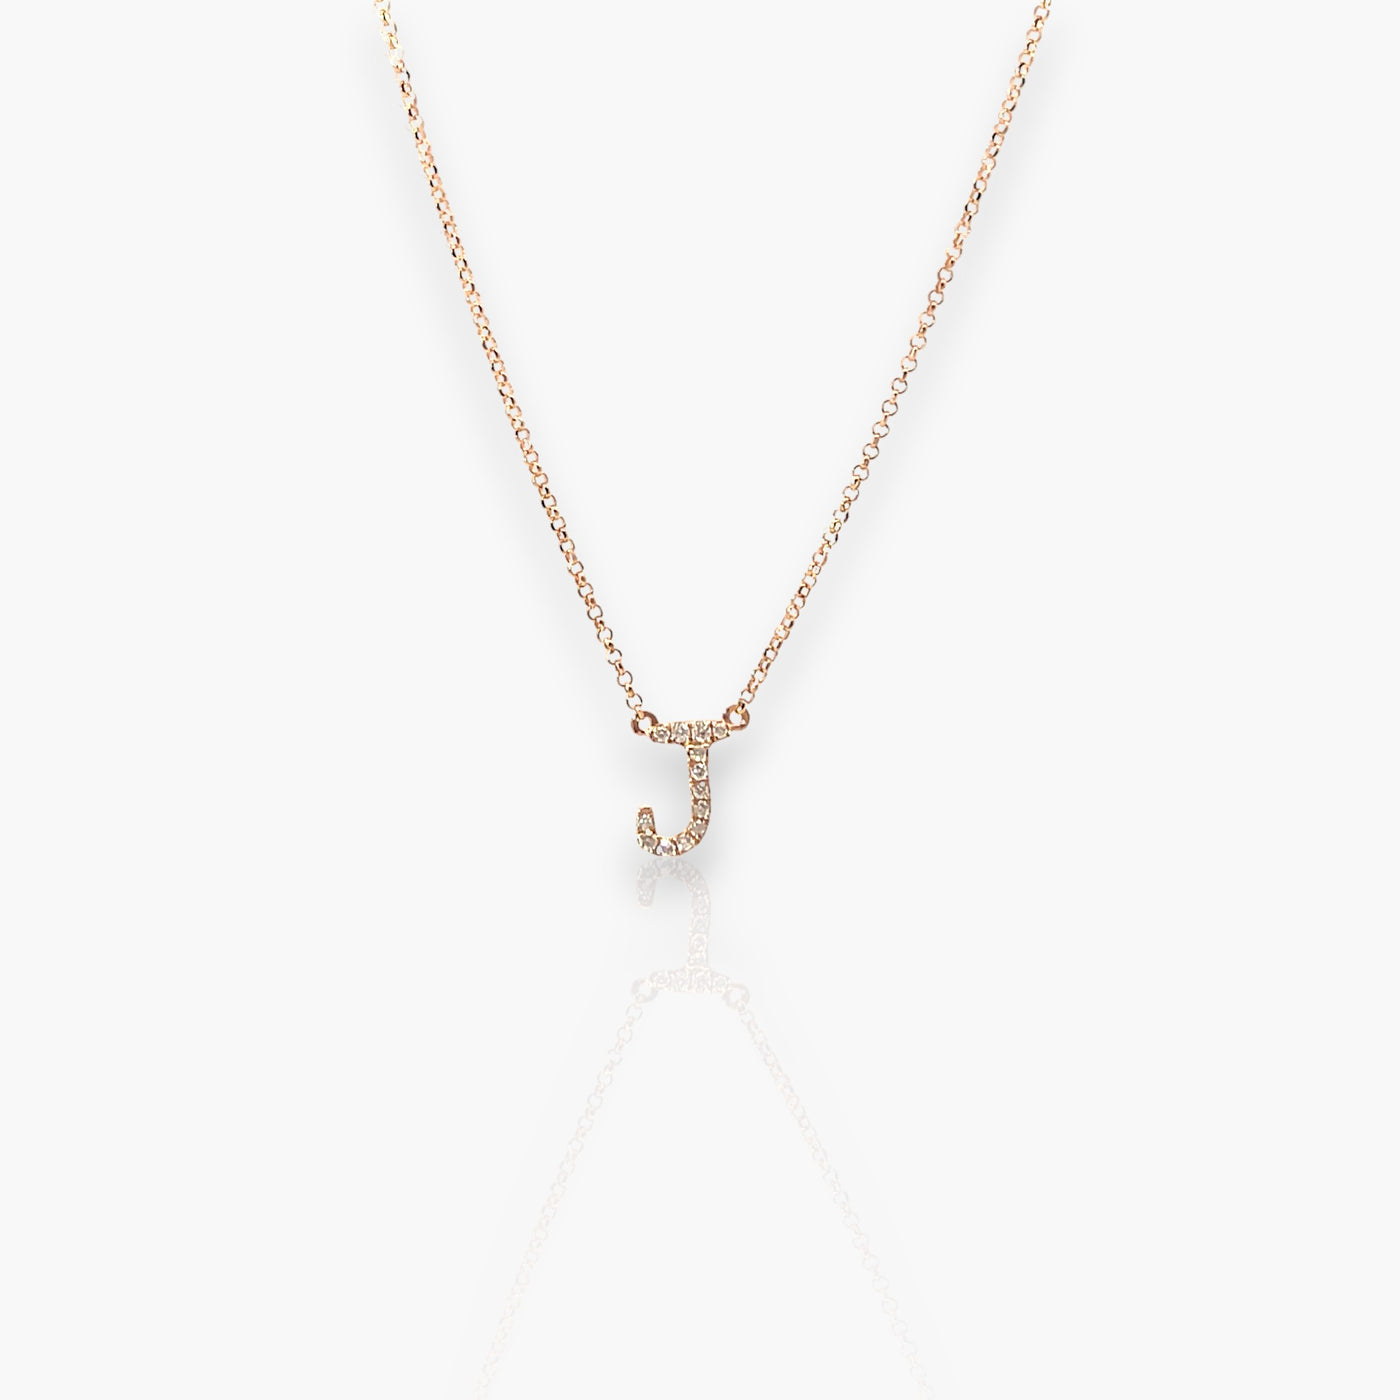 18K Gold Necklace, Letters (A-Z) - Moregola Fine Jewelry